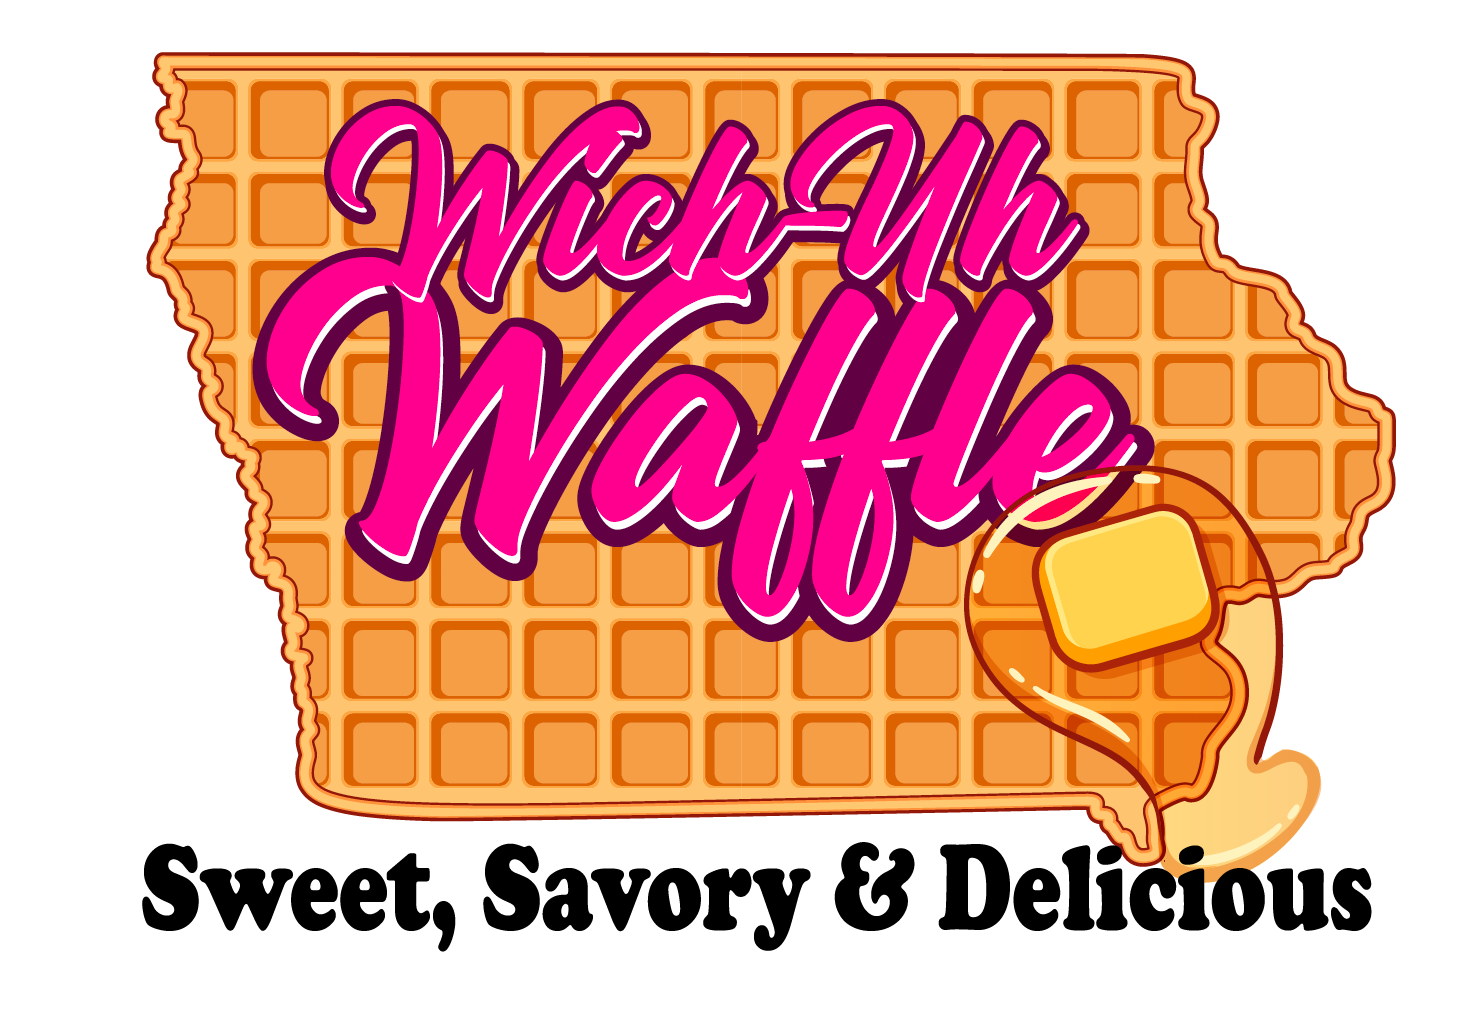 Wich-Uh-Waffle Logo